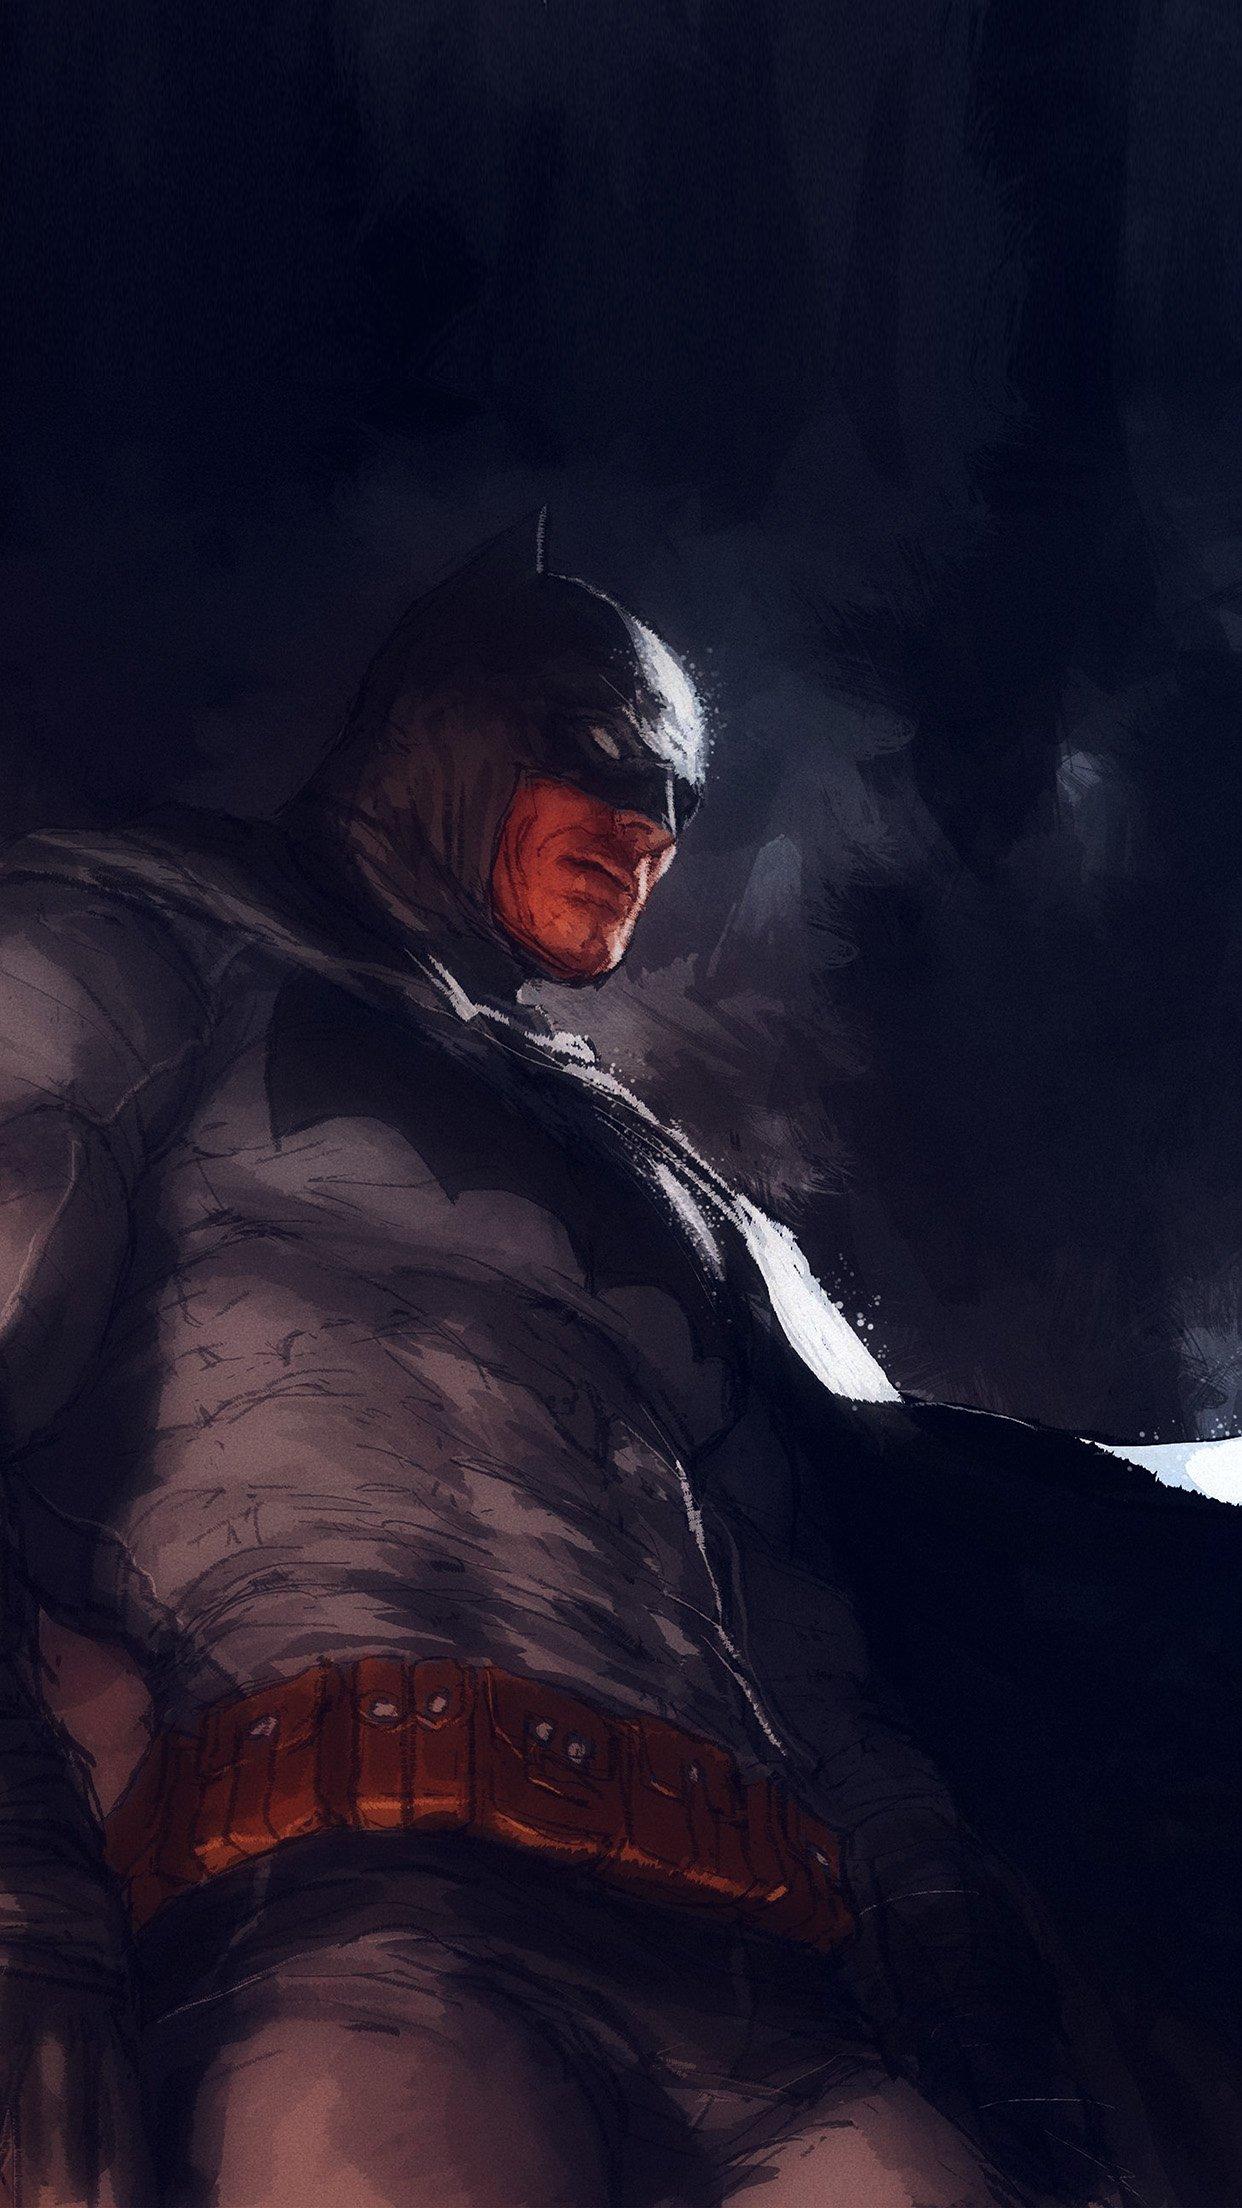 iPhone7 wallpaper. batman art